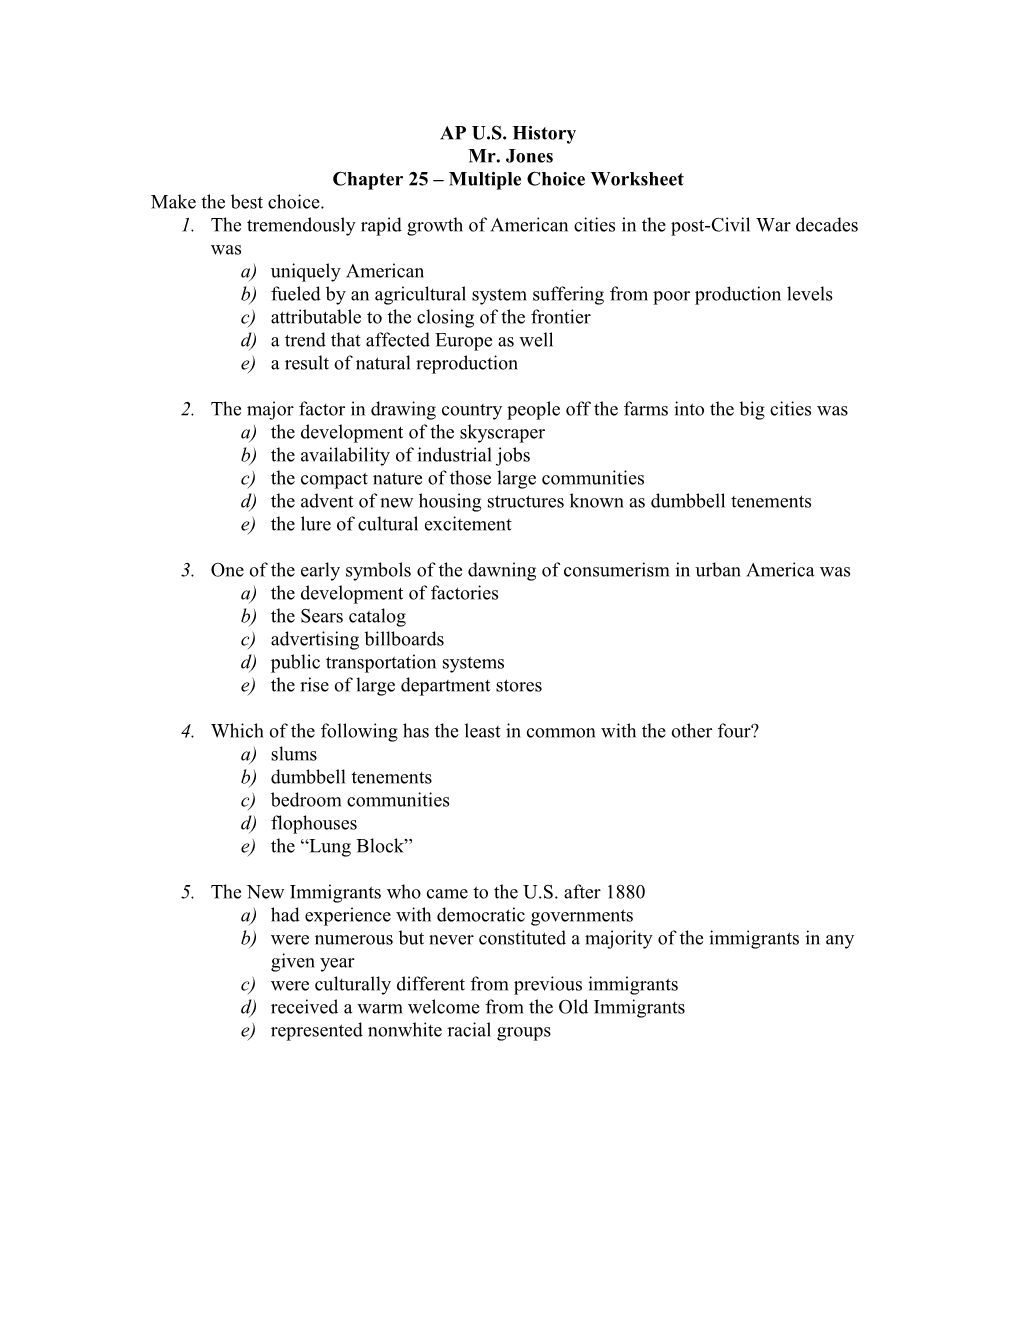 Chapter 25 Multiple Choice Worksheet